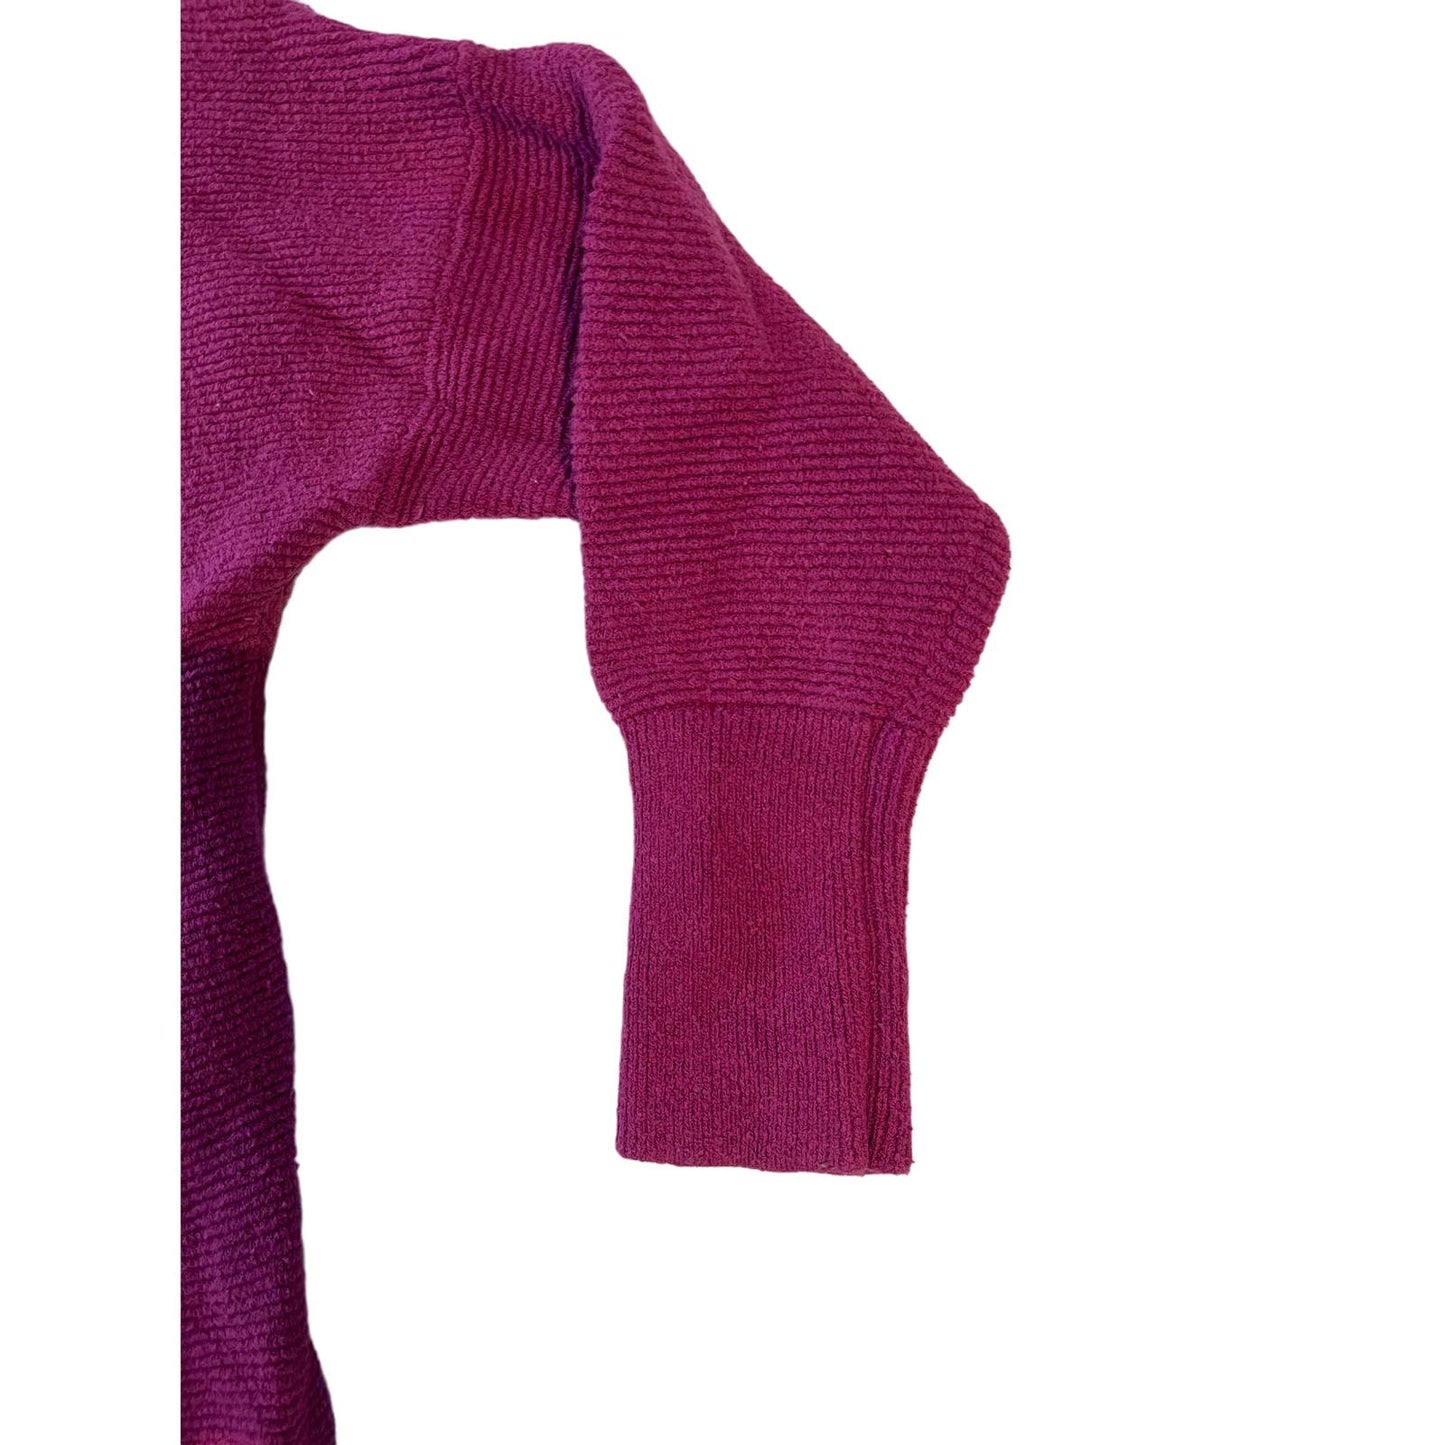 Women's Free People Size Small Fuchsia Long Sleeve Cowl Neck Sweater